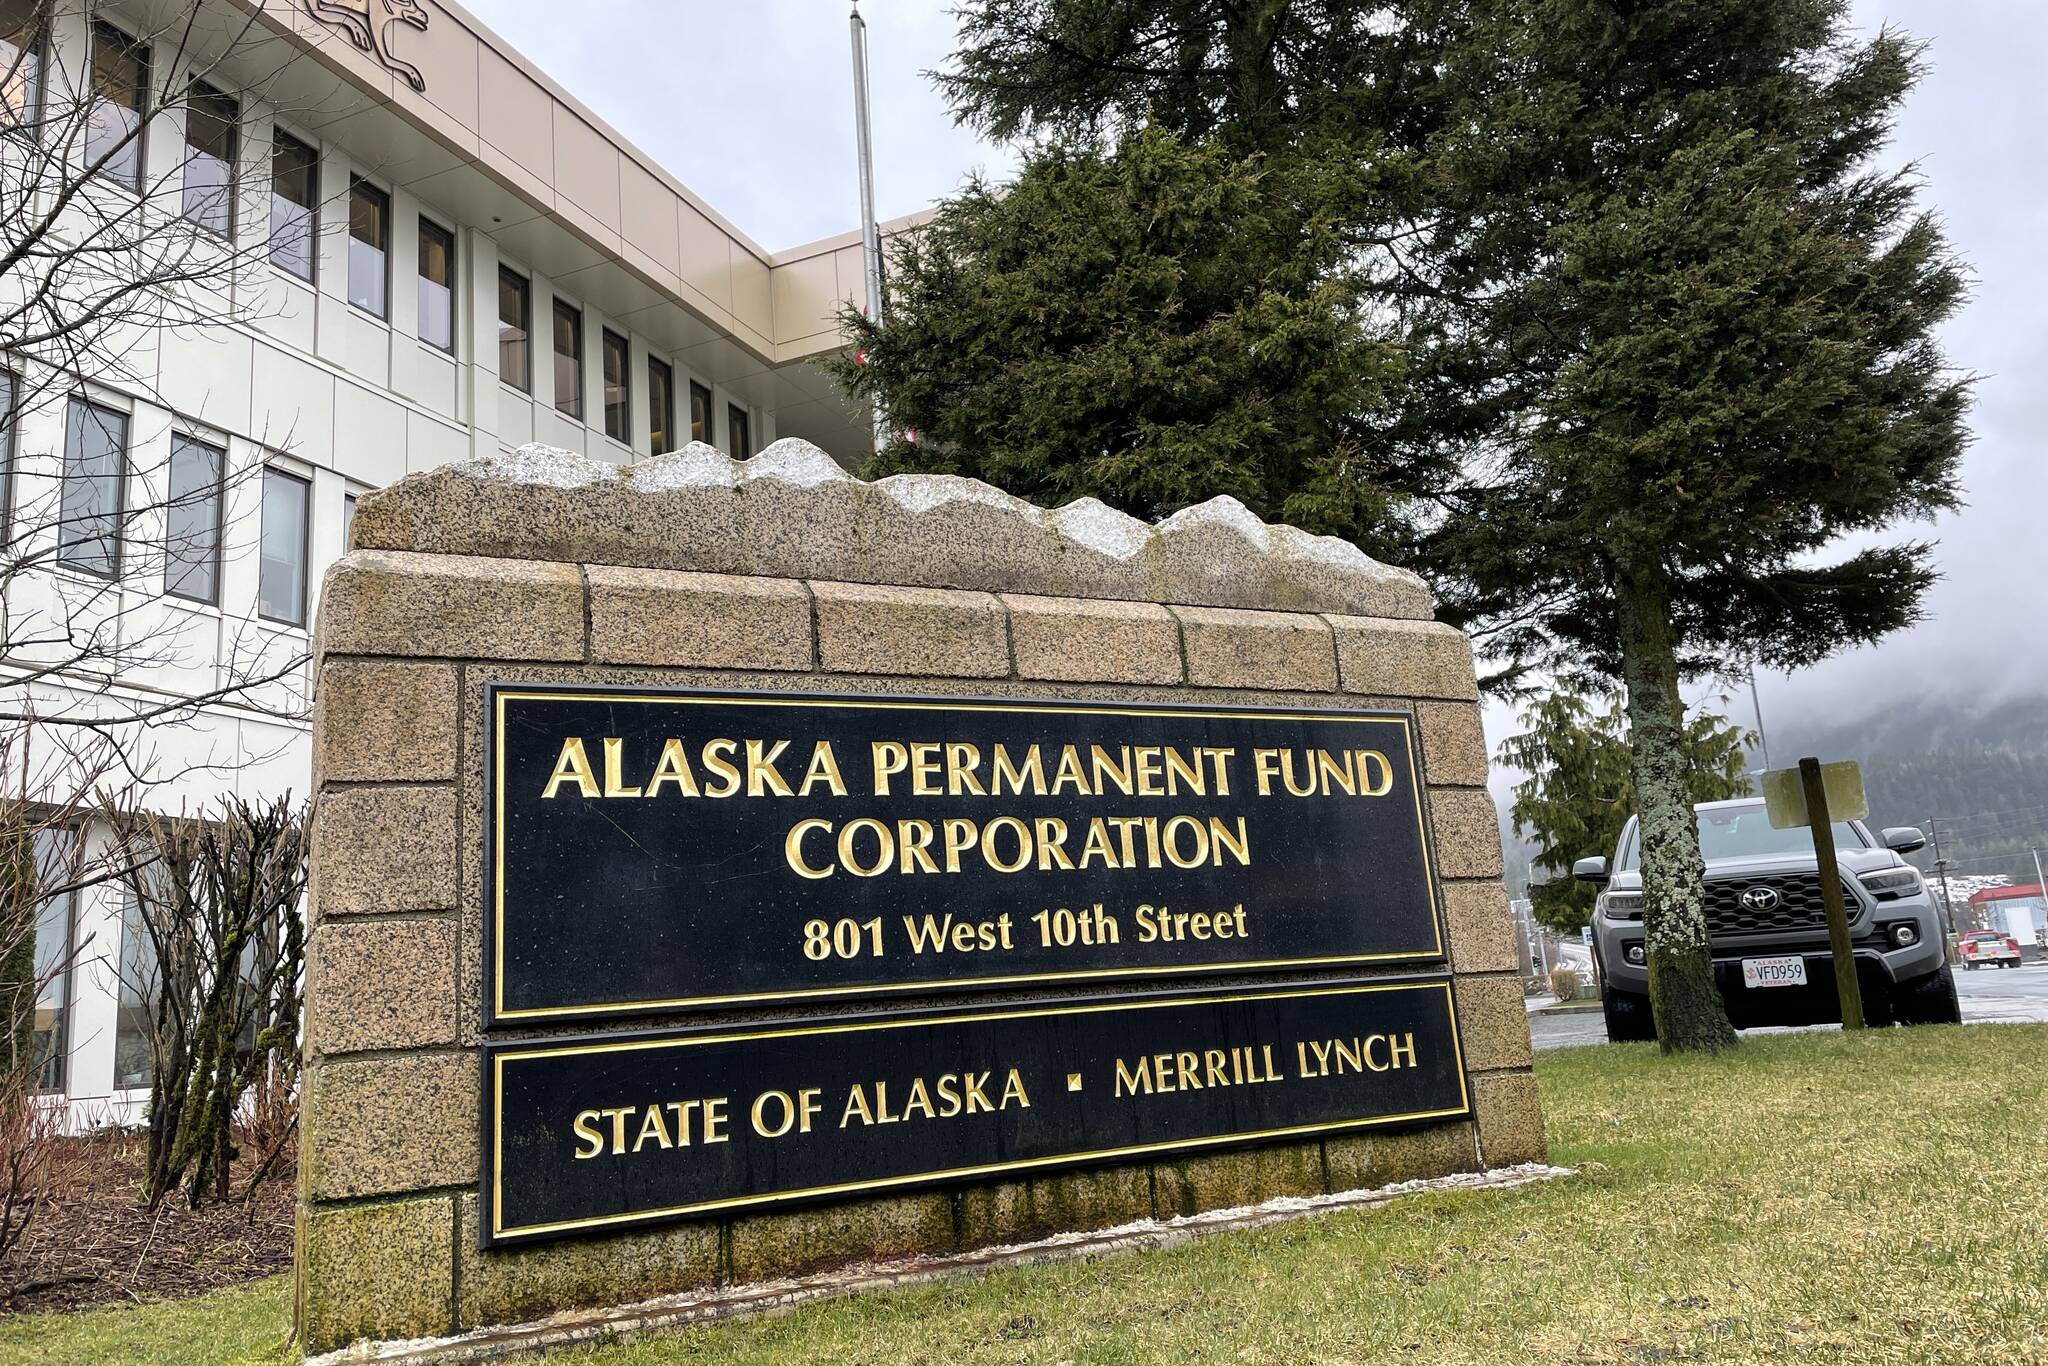 The Alaska Permanent Fund Corporation building is seen in March 2022 in Juneau, Alaska. (Michael S. Lockett / Juneau Empire)